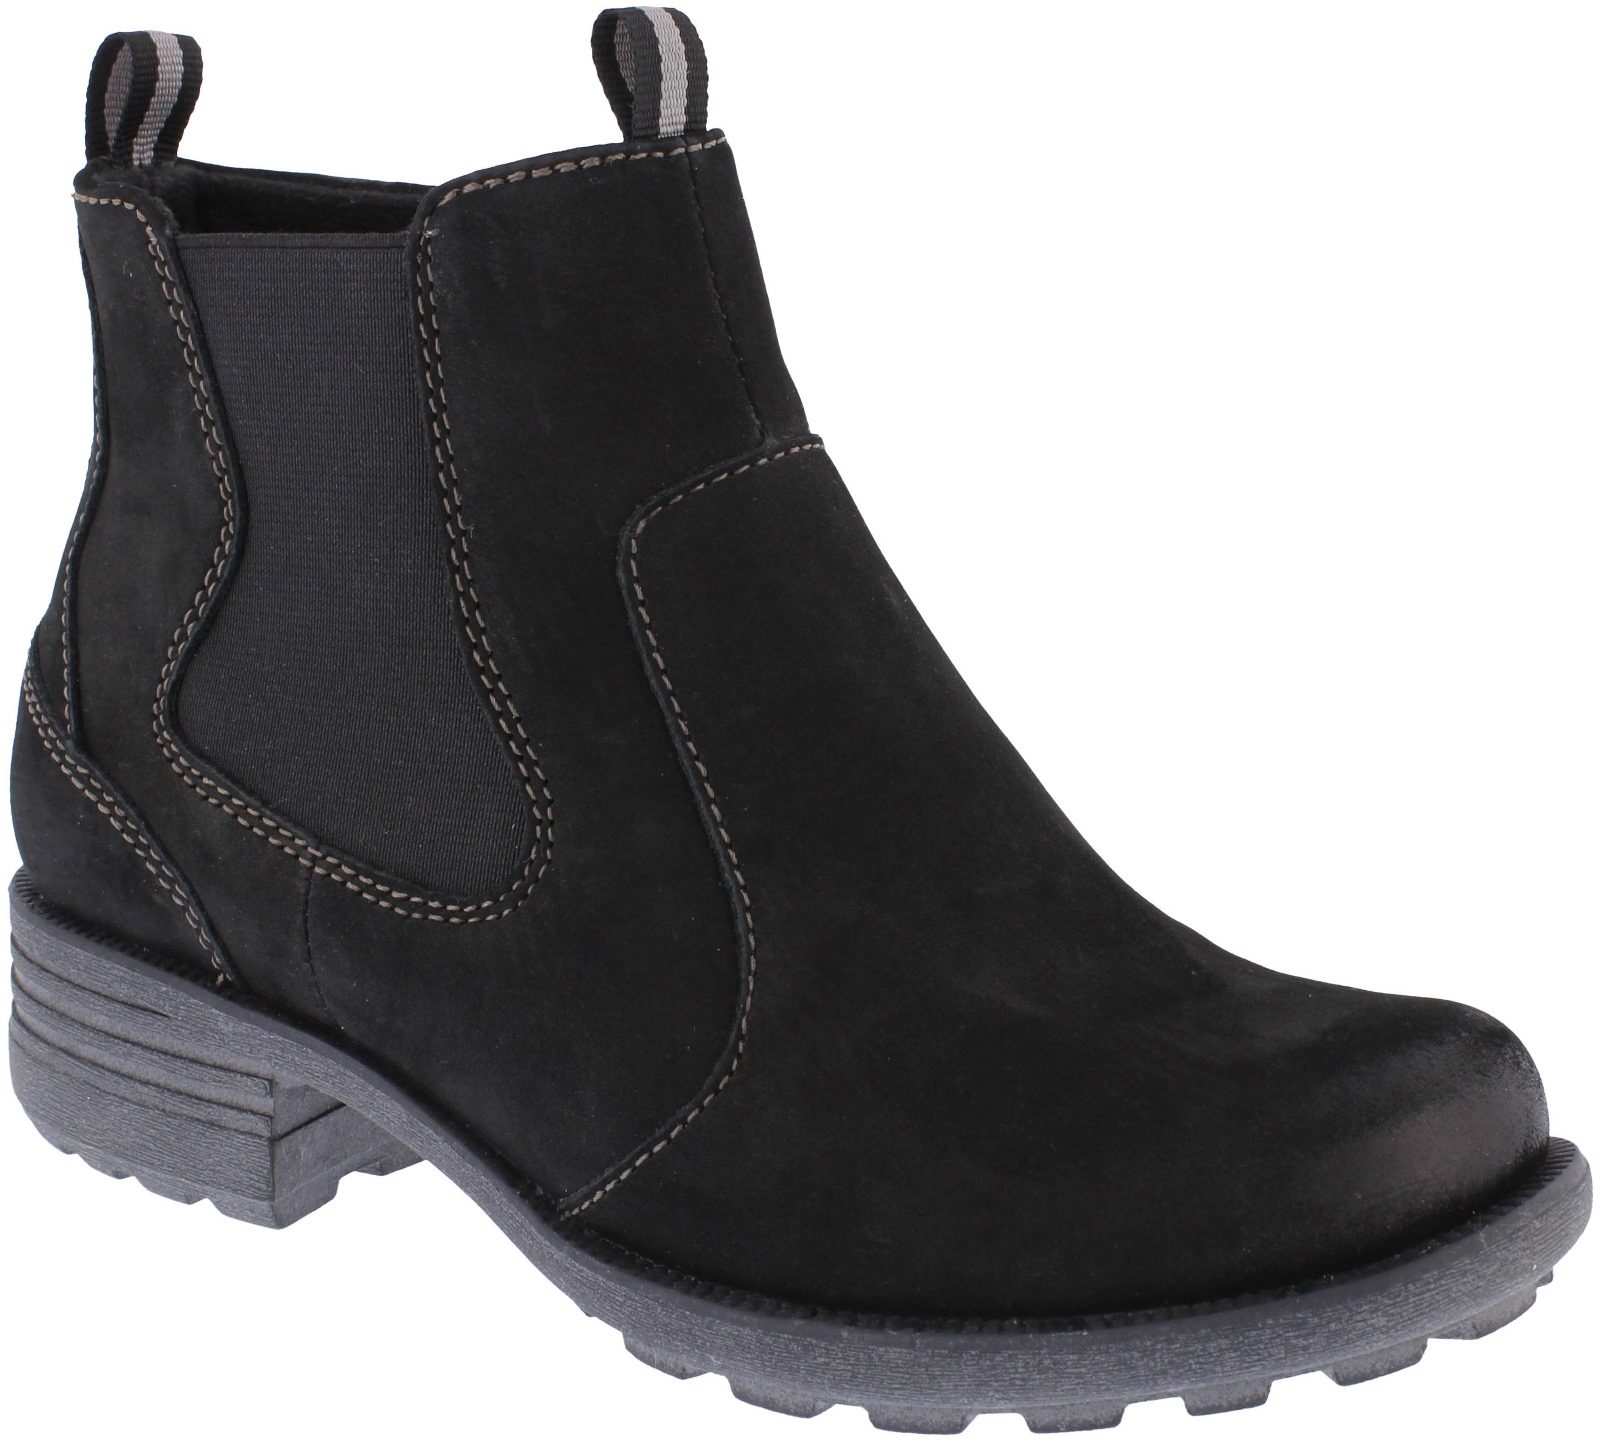 Free Spirit Ascot Boot Black - Fashion Boots - Mole Avon